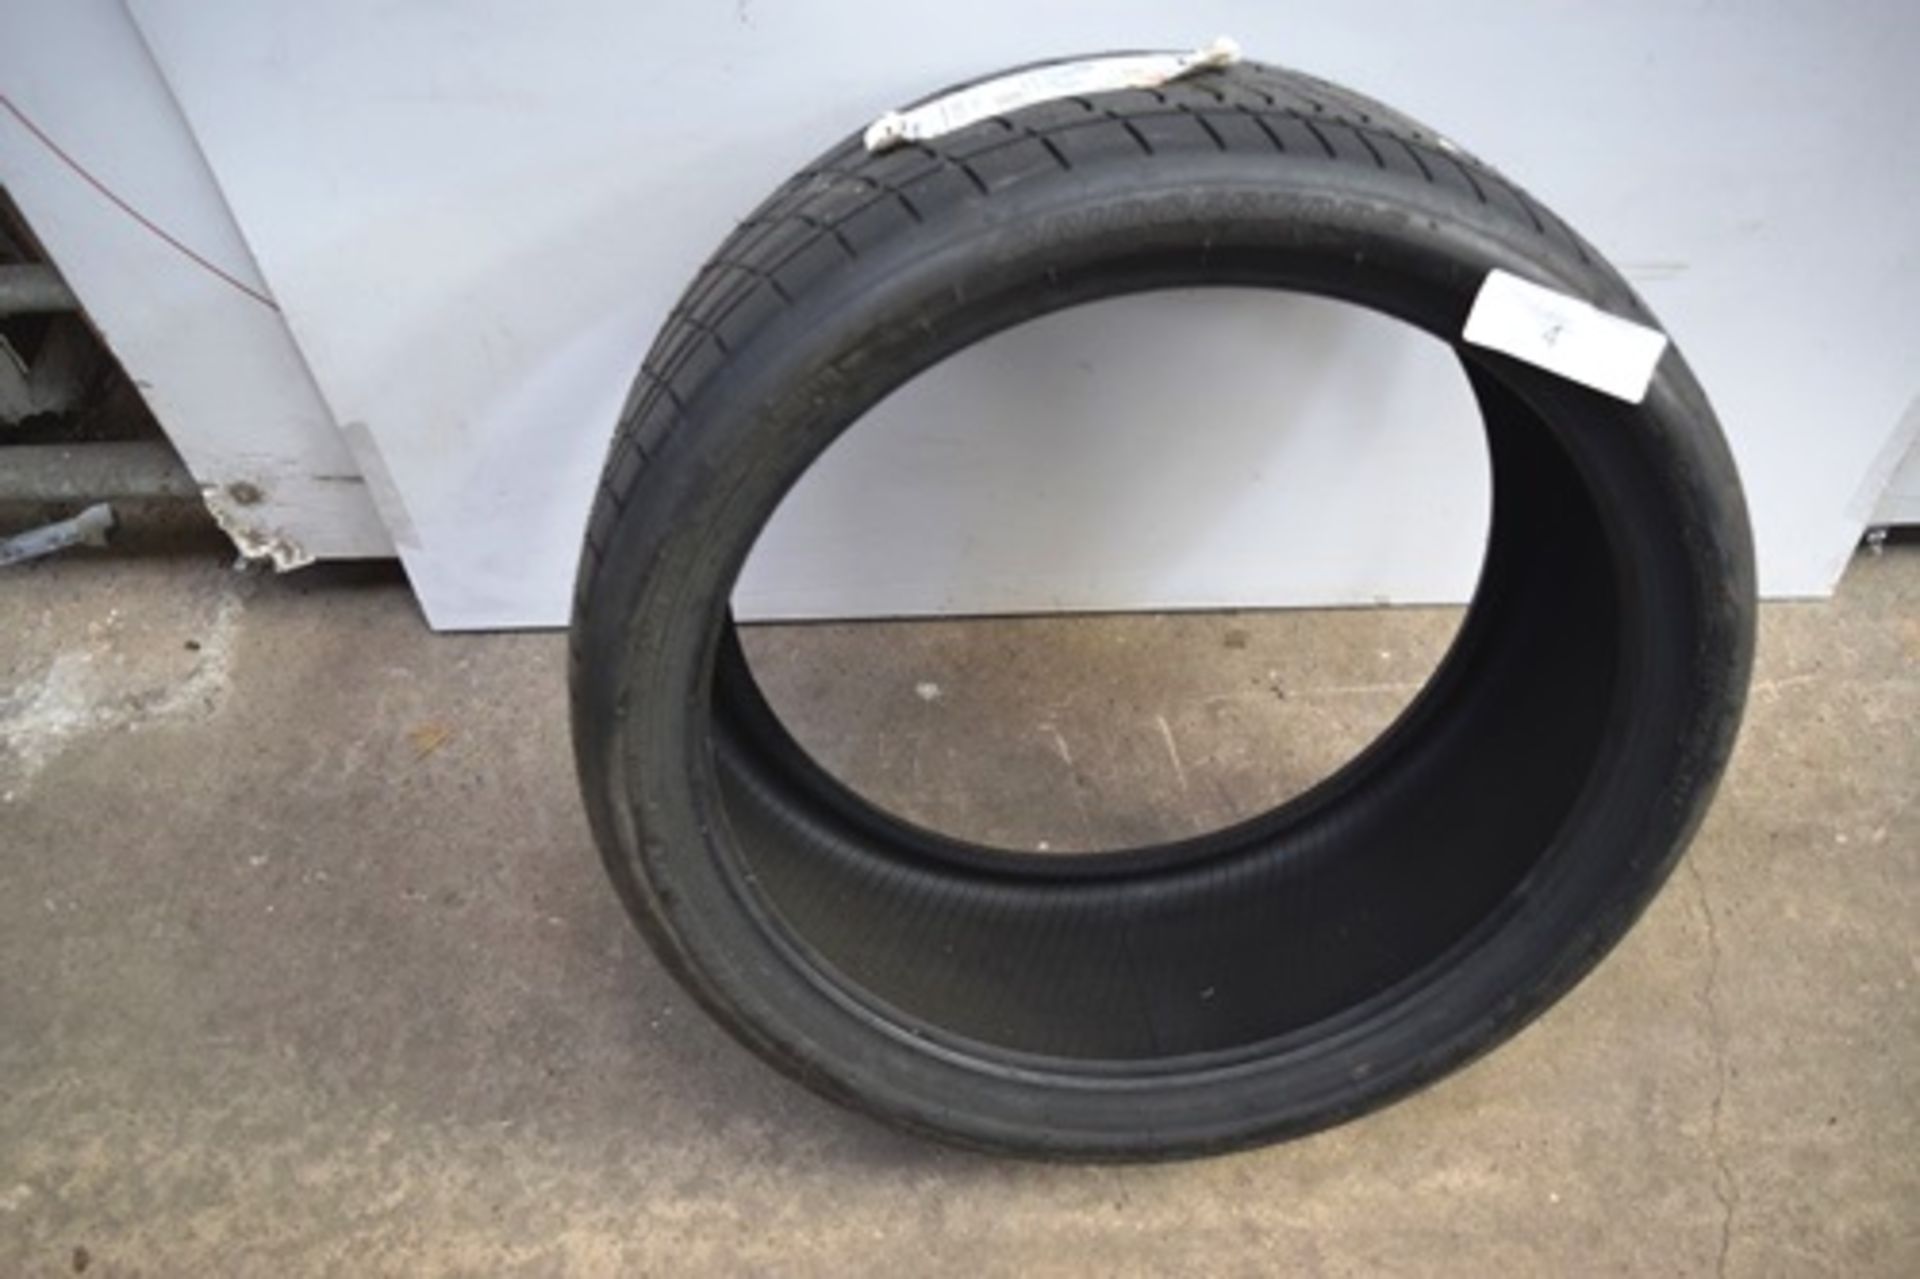 1 x Bridgestone Potenza S007 tyre, size 275/30R20 97Y XL - New with label (GS1) - Image 2 of 2